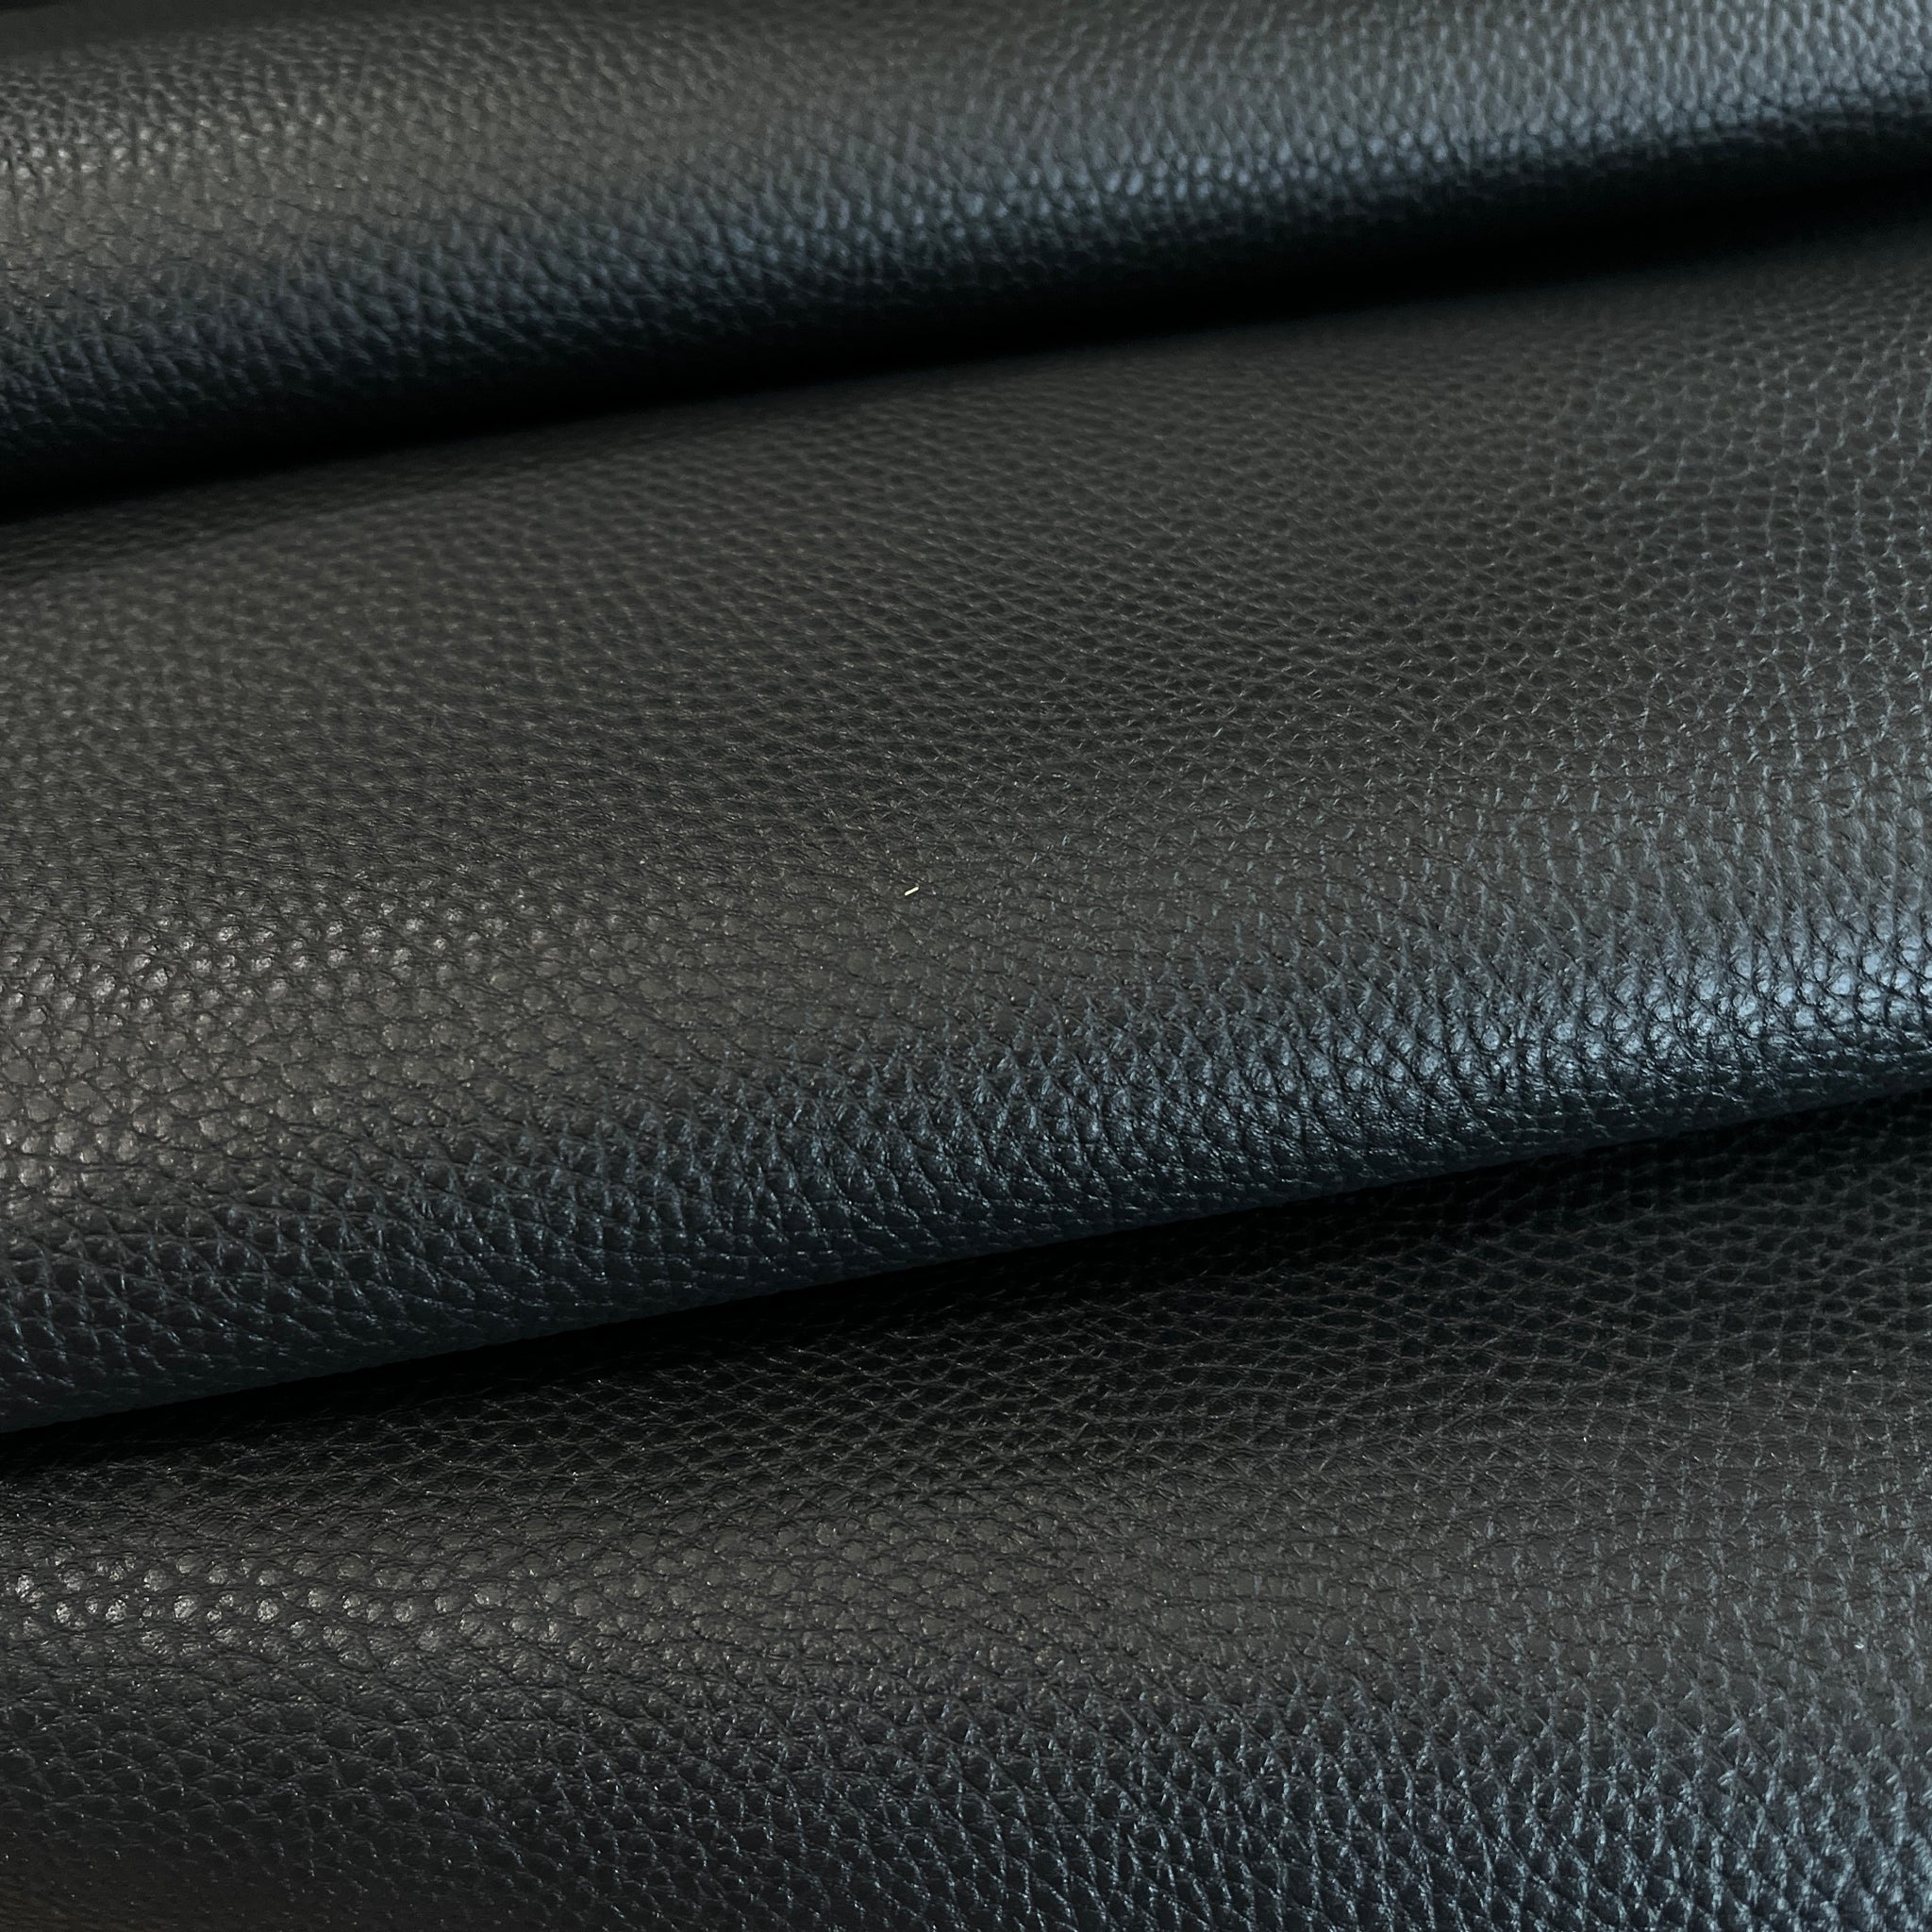 Lightweight Faux Leather - Black Textured Vinyl